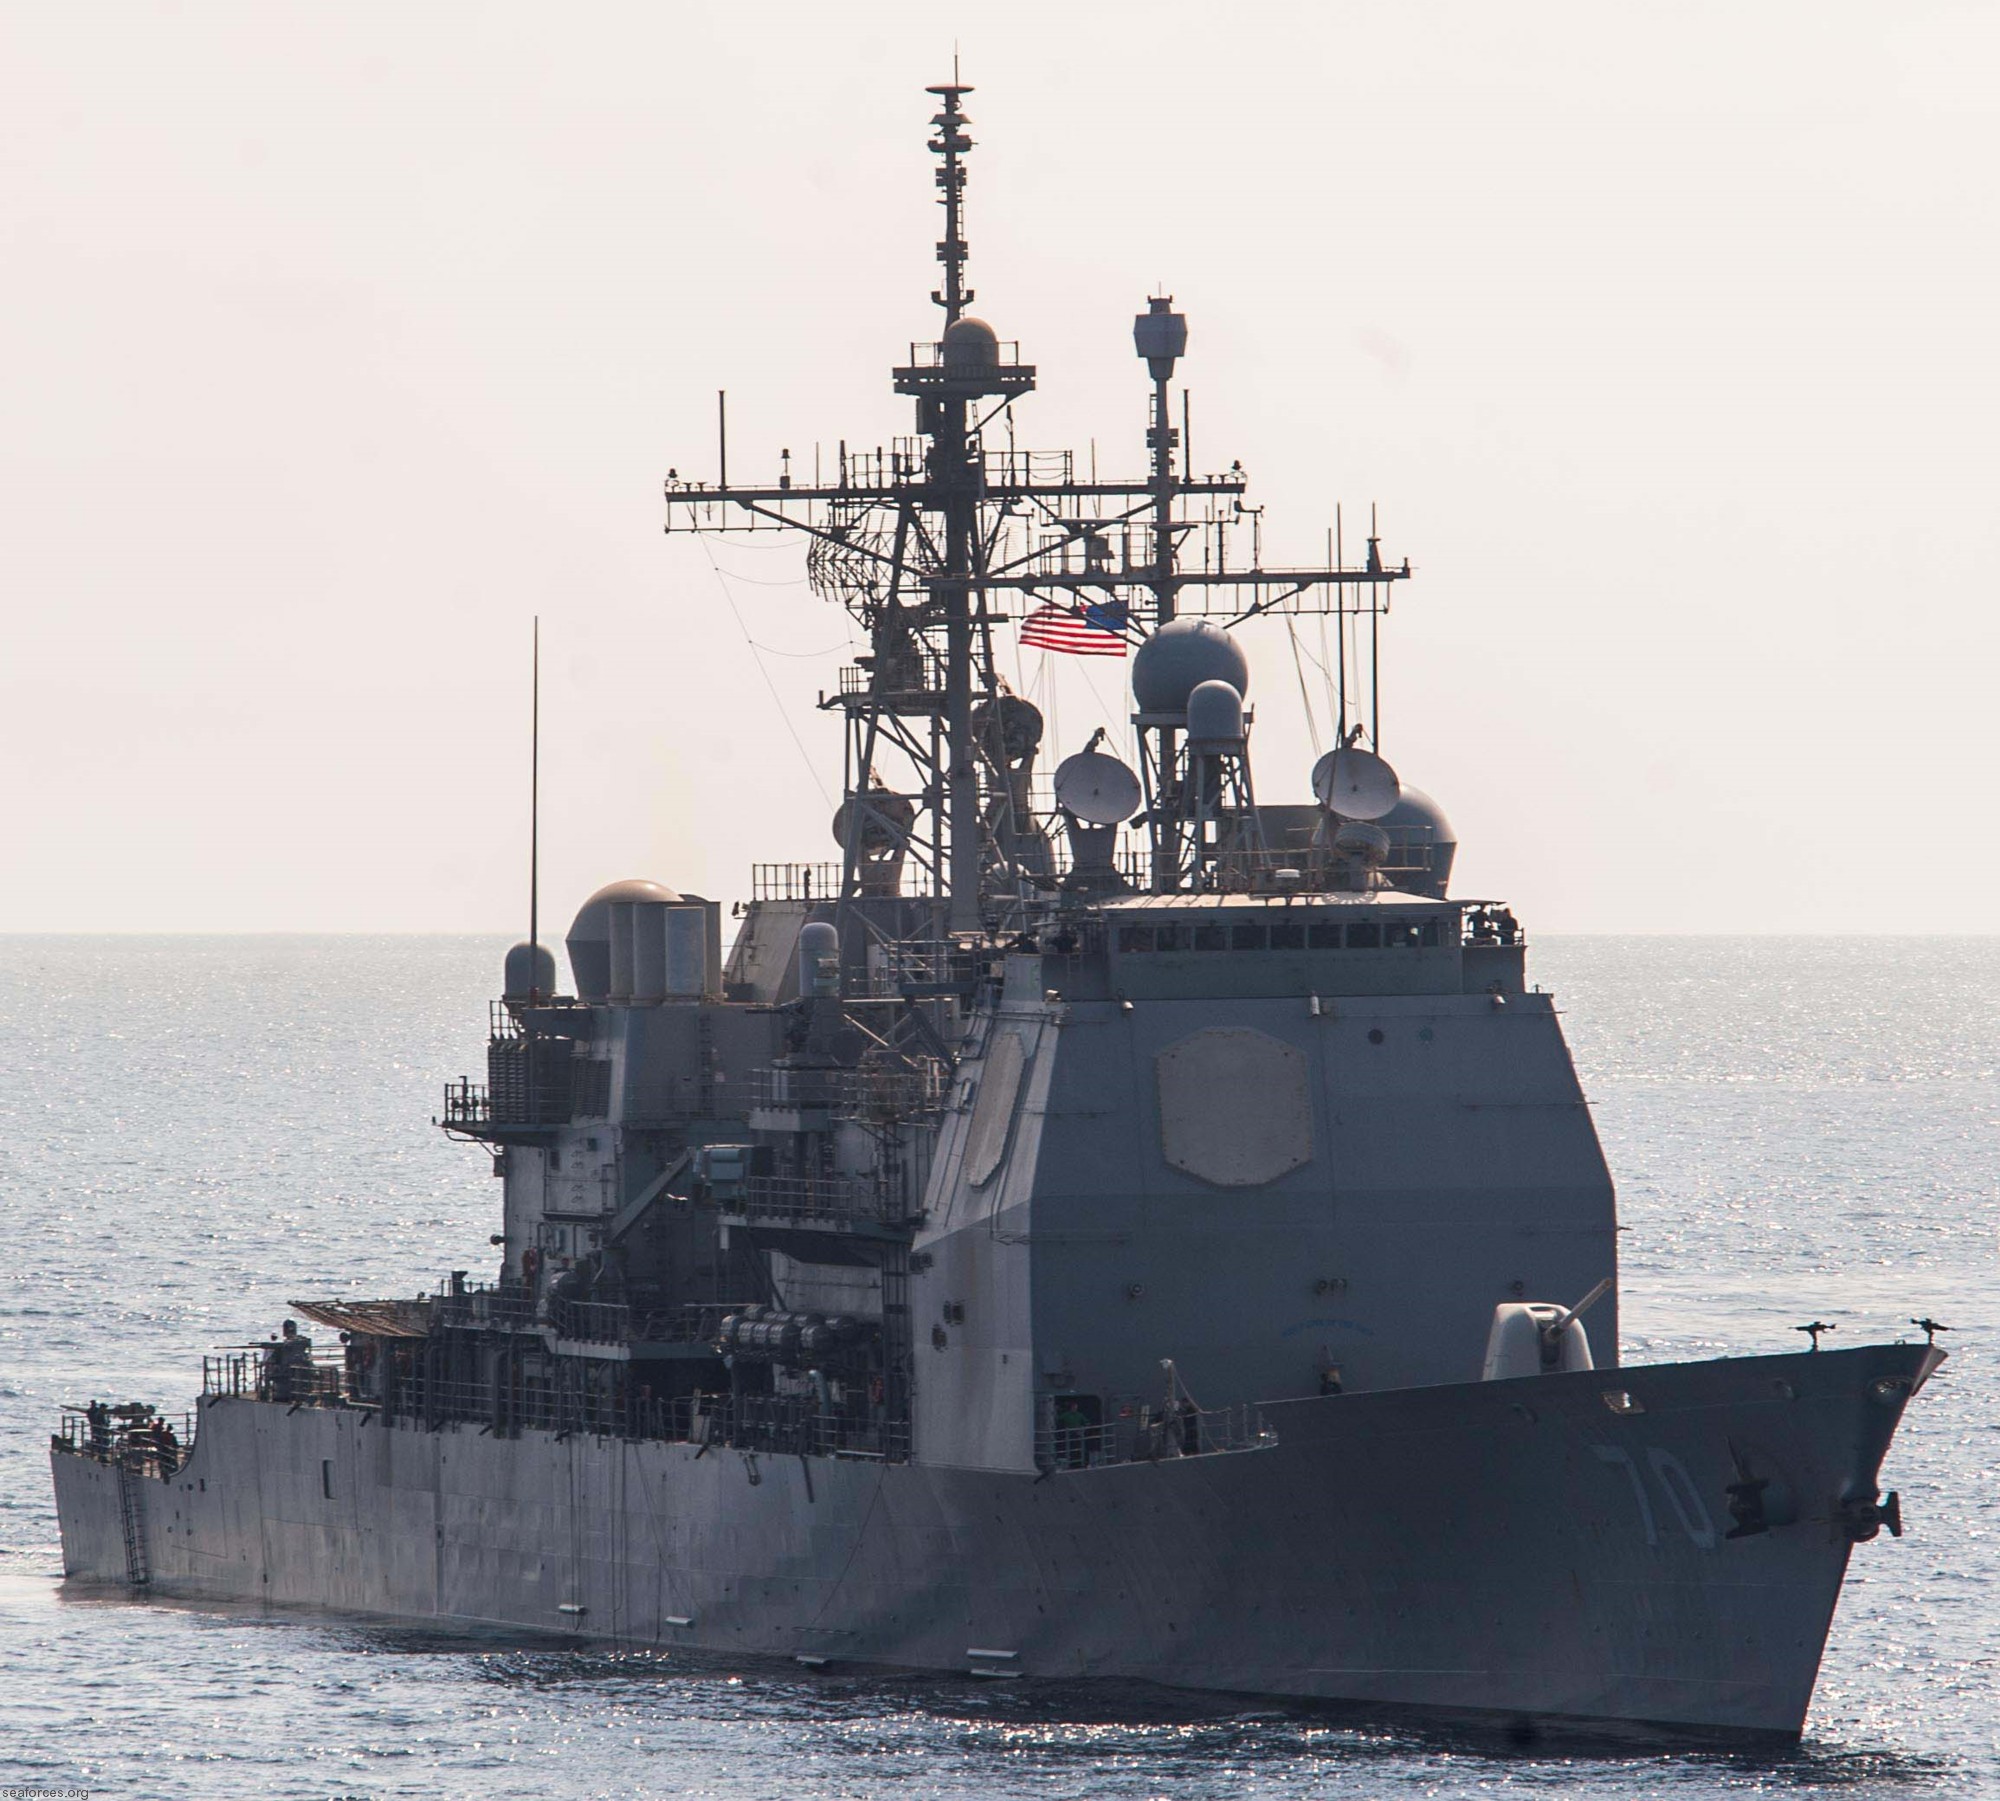 cg-70 uss lake erie ticonderoga class guided missile cruiser navy 02 5th fleet aor